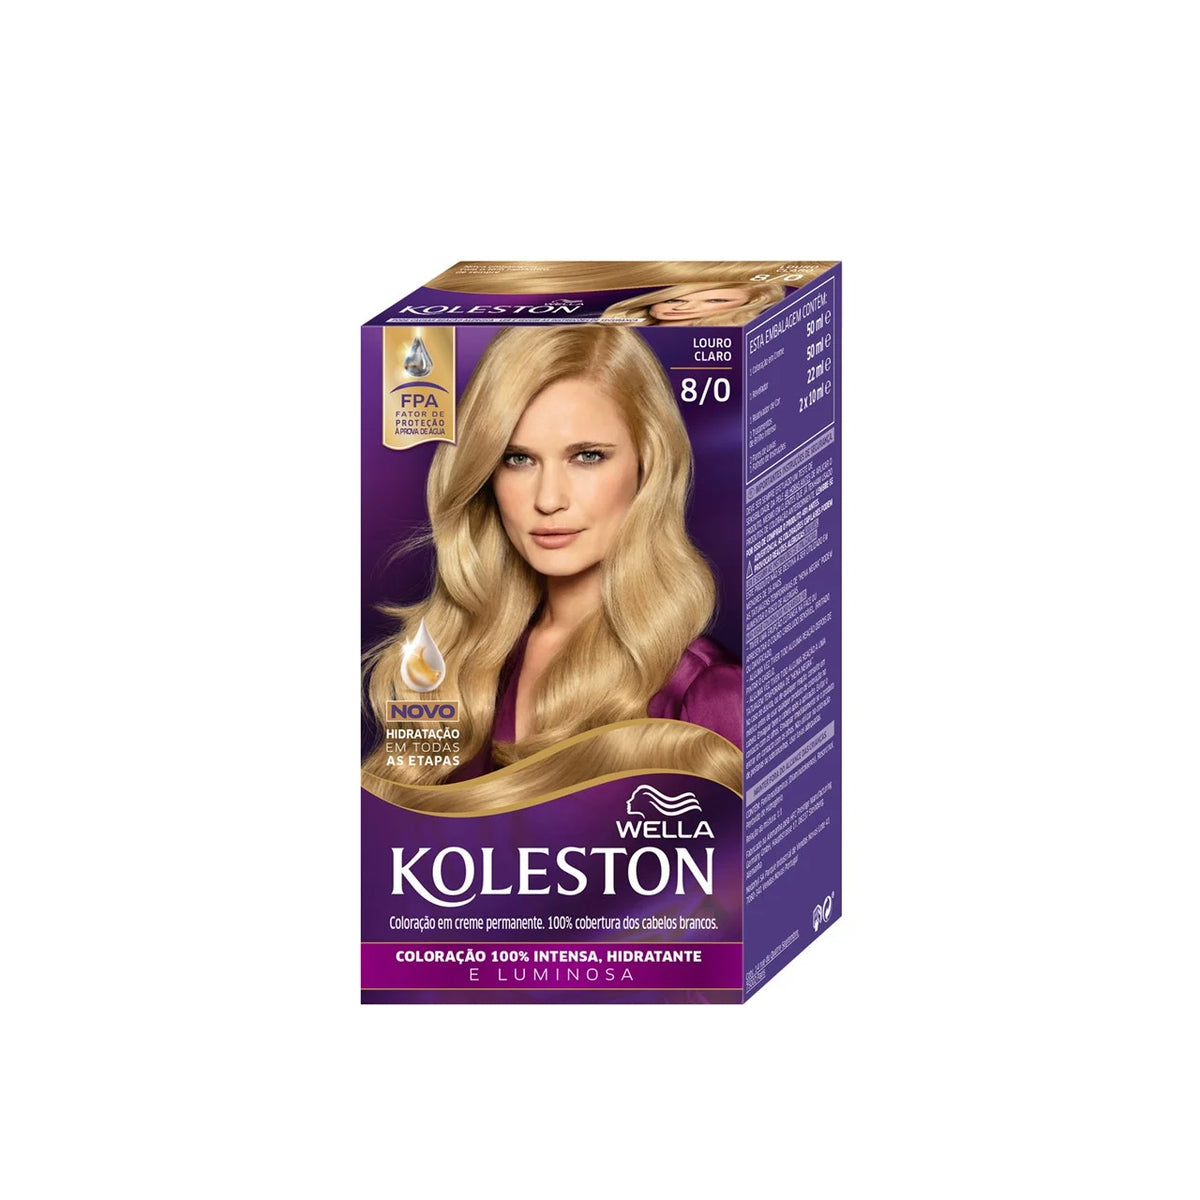 Wella Koleston Permanent Hair Color 8/0 Light Blonde